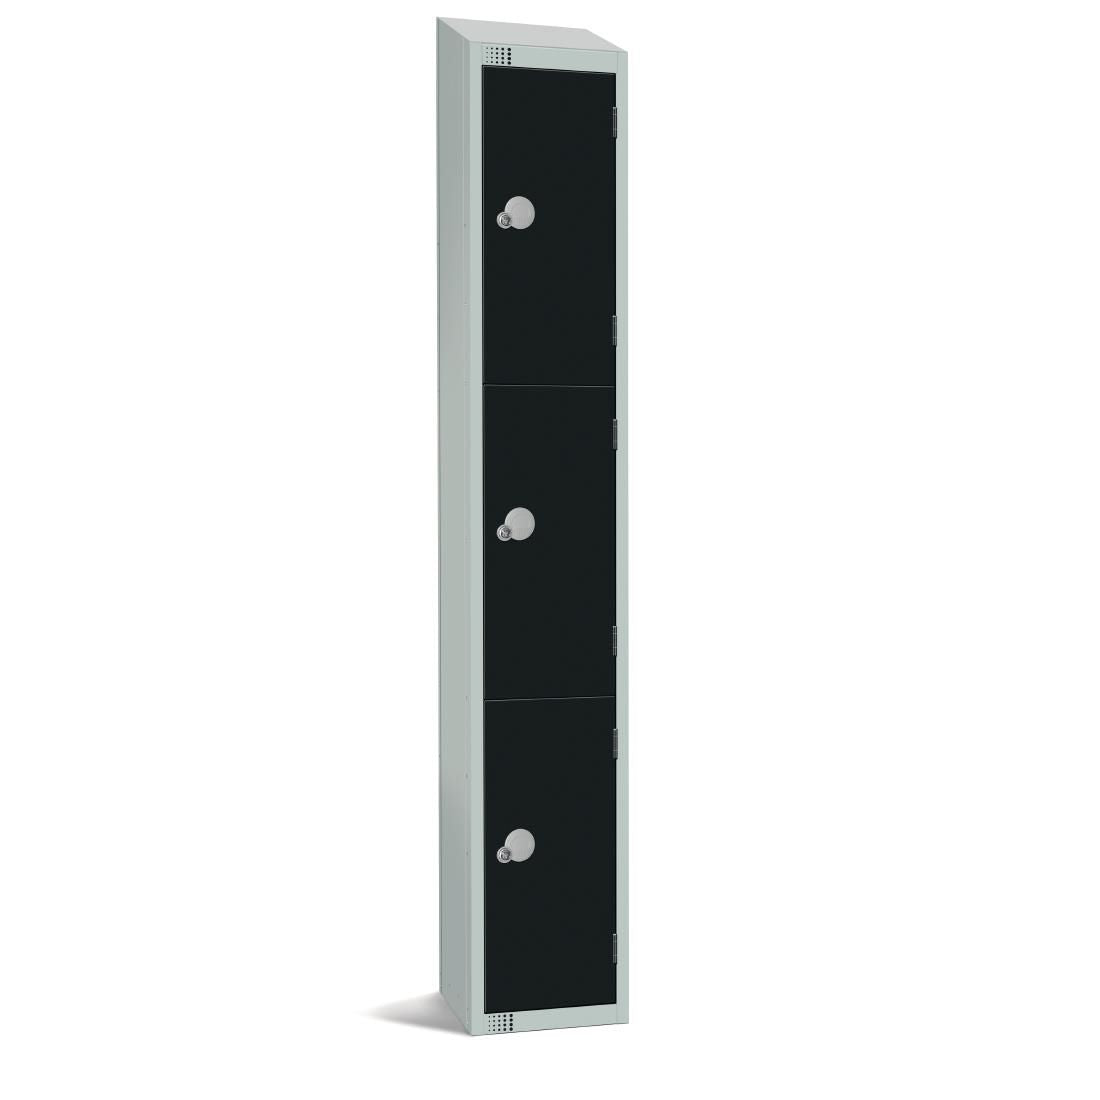 CLS Elite Three Door Manual Combination Locker Locker Black with sloping top JD Catering Equipment Solutions Ltd